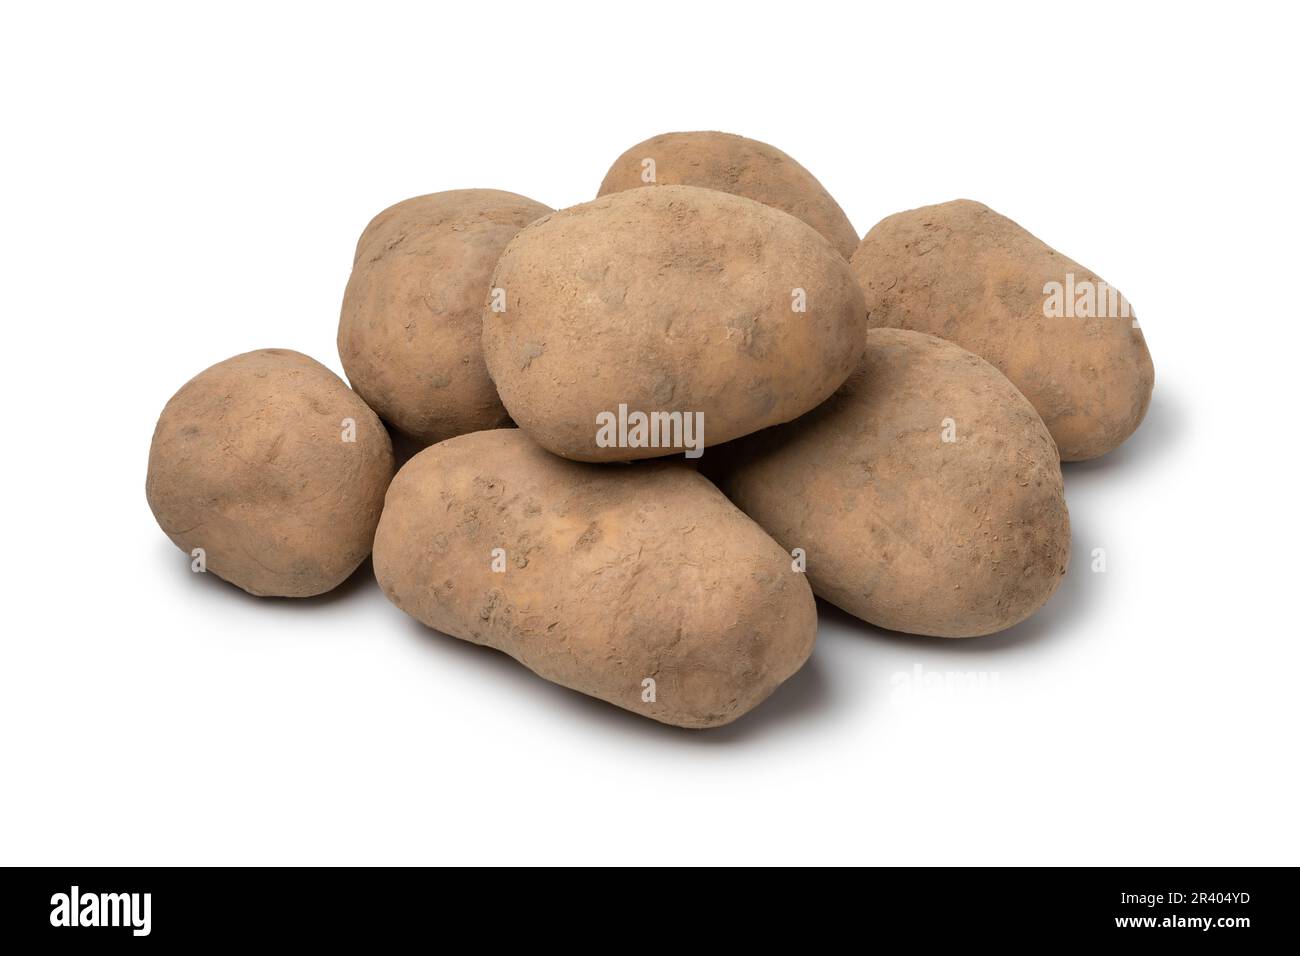 Heap of fresh Dutch variety potato called Bintje close up isolated on white background Stock Photo